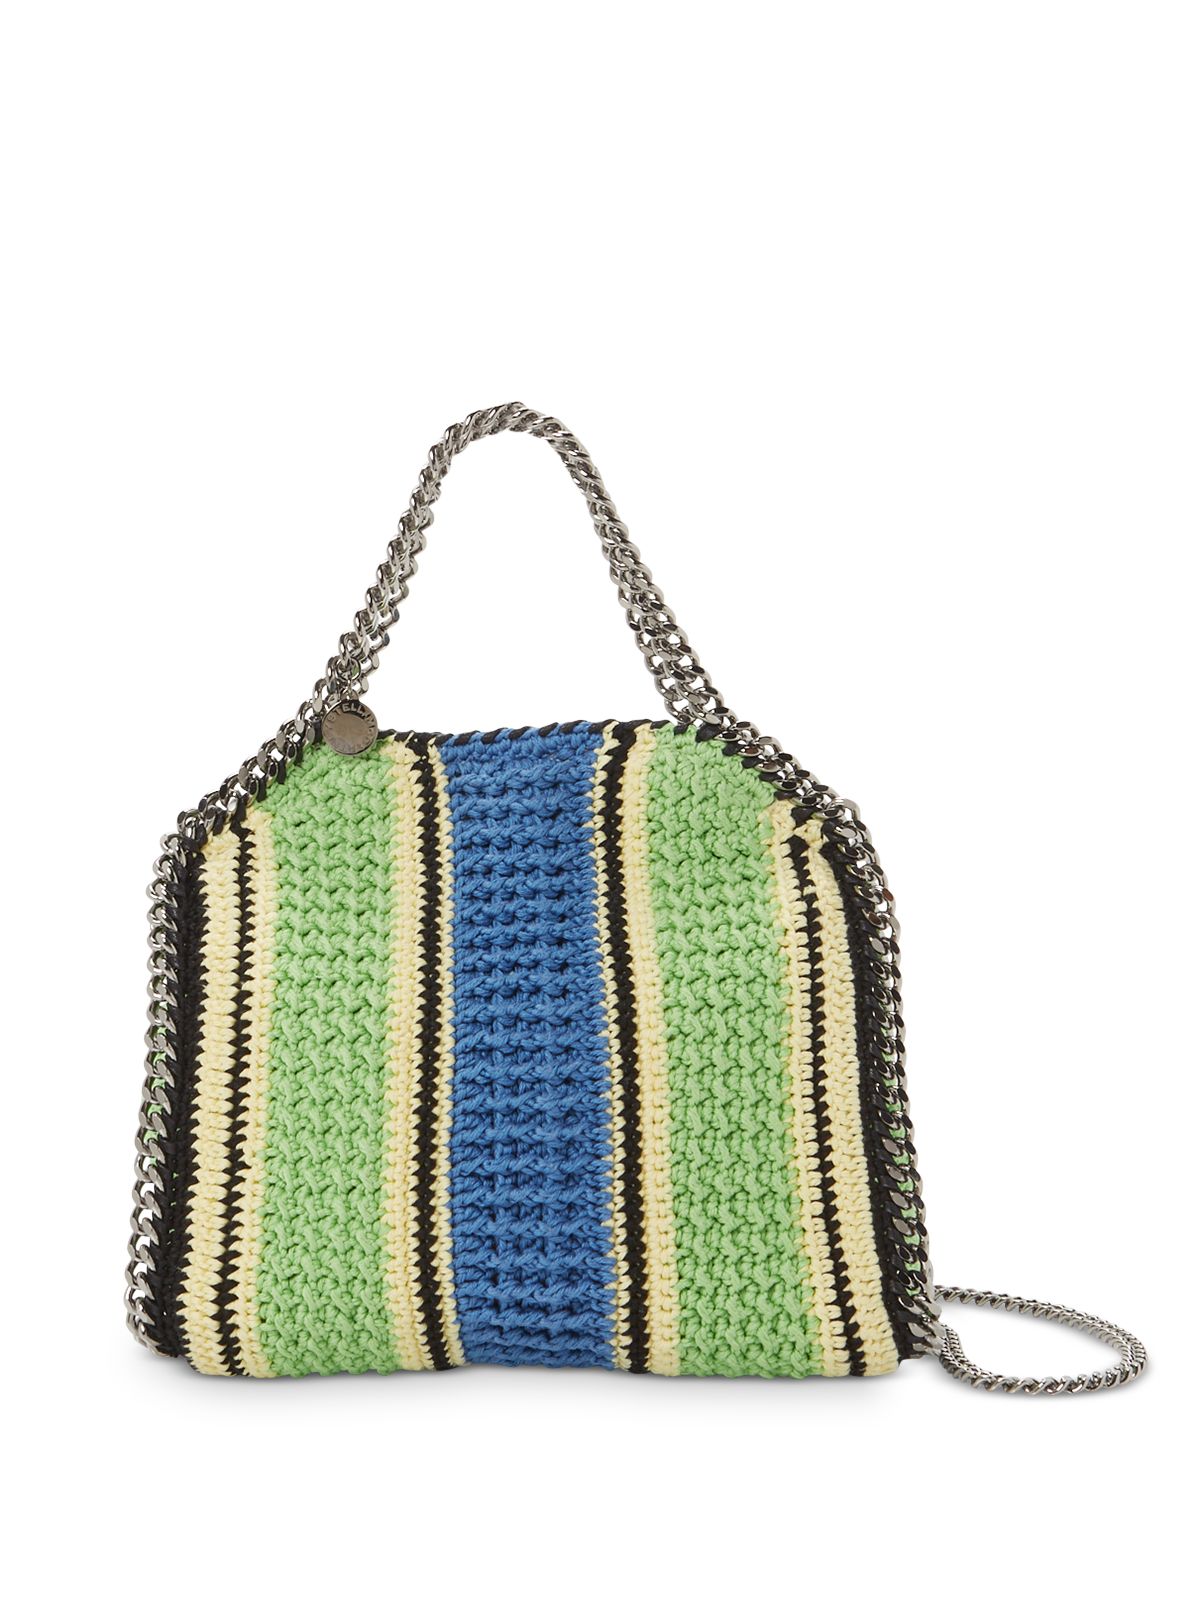 STELLAMCCARTNEY Women's Green Striped Faux Suede Crochet Chain Strap Tote Handbag Purse